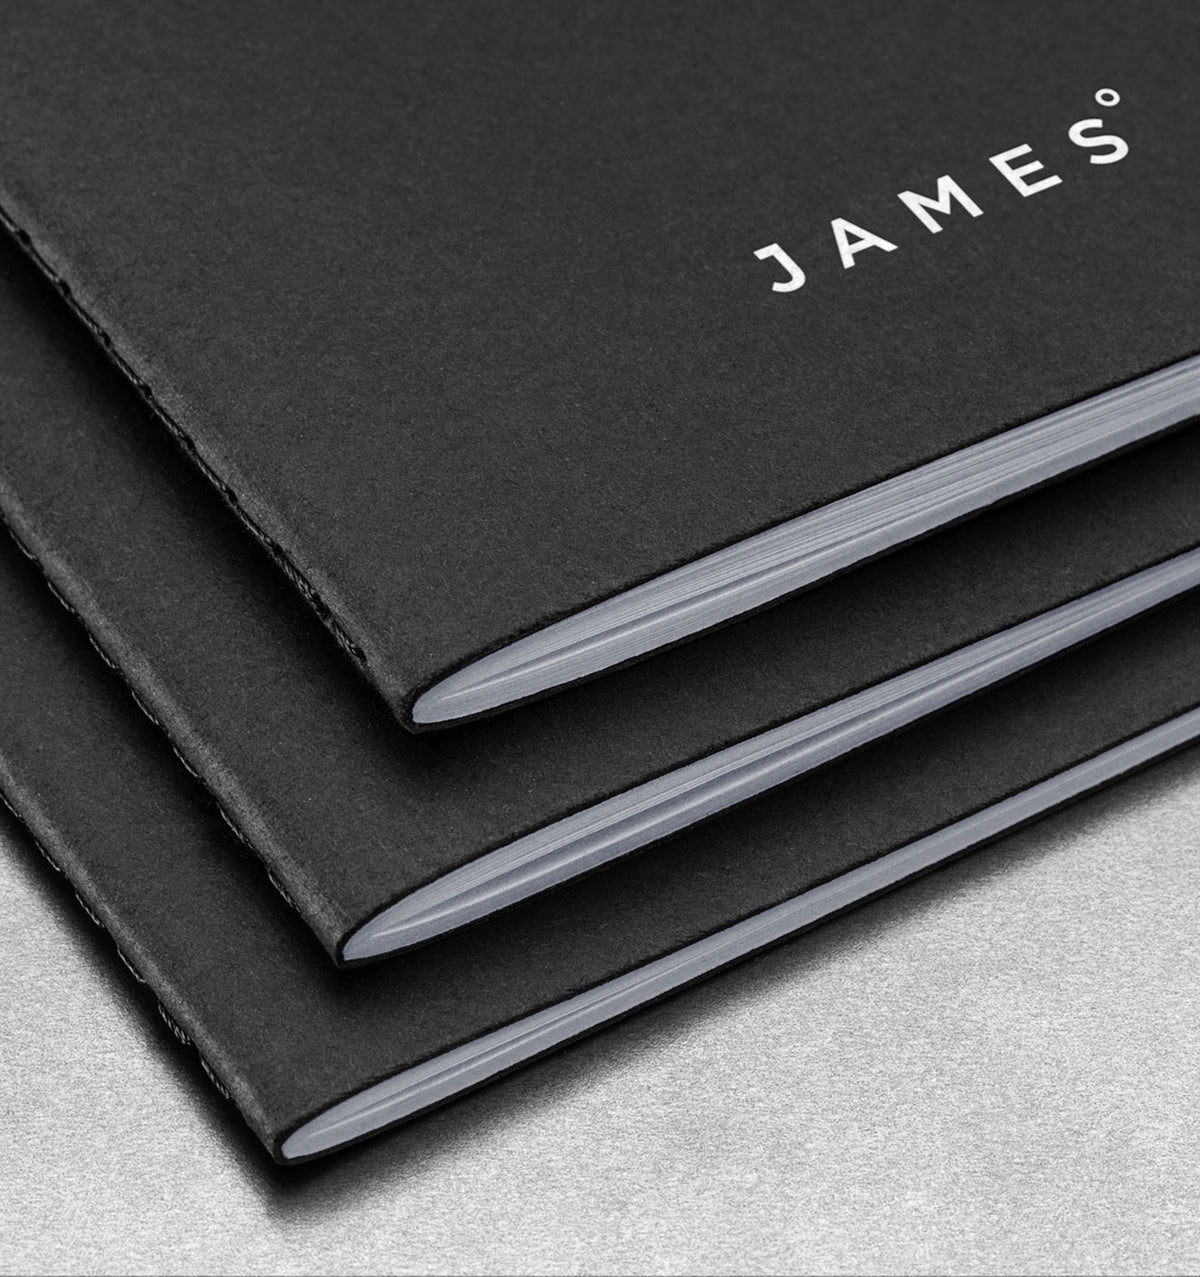 The James Brand - The Notebooks - Matte Black